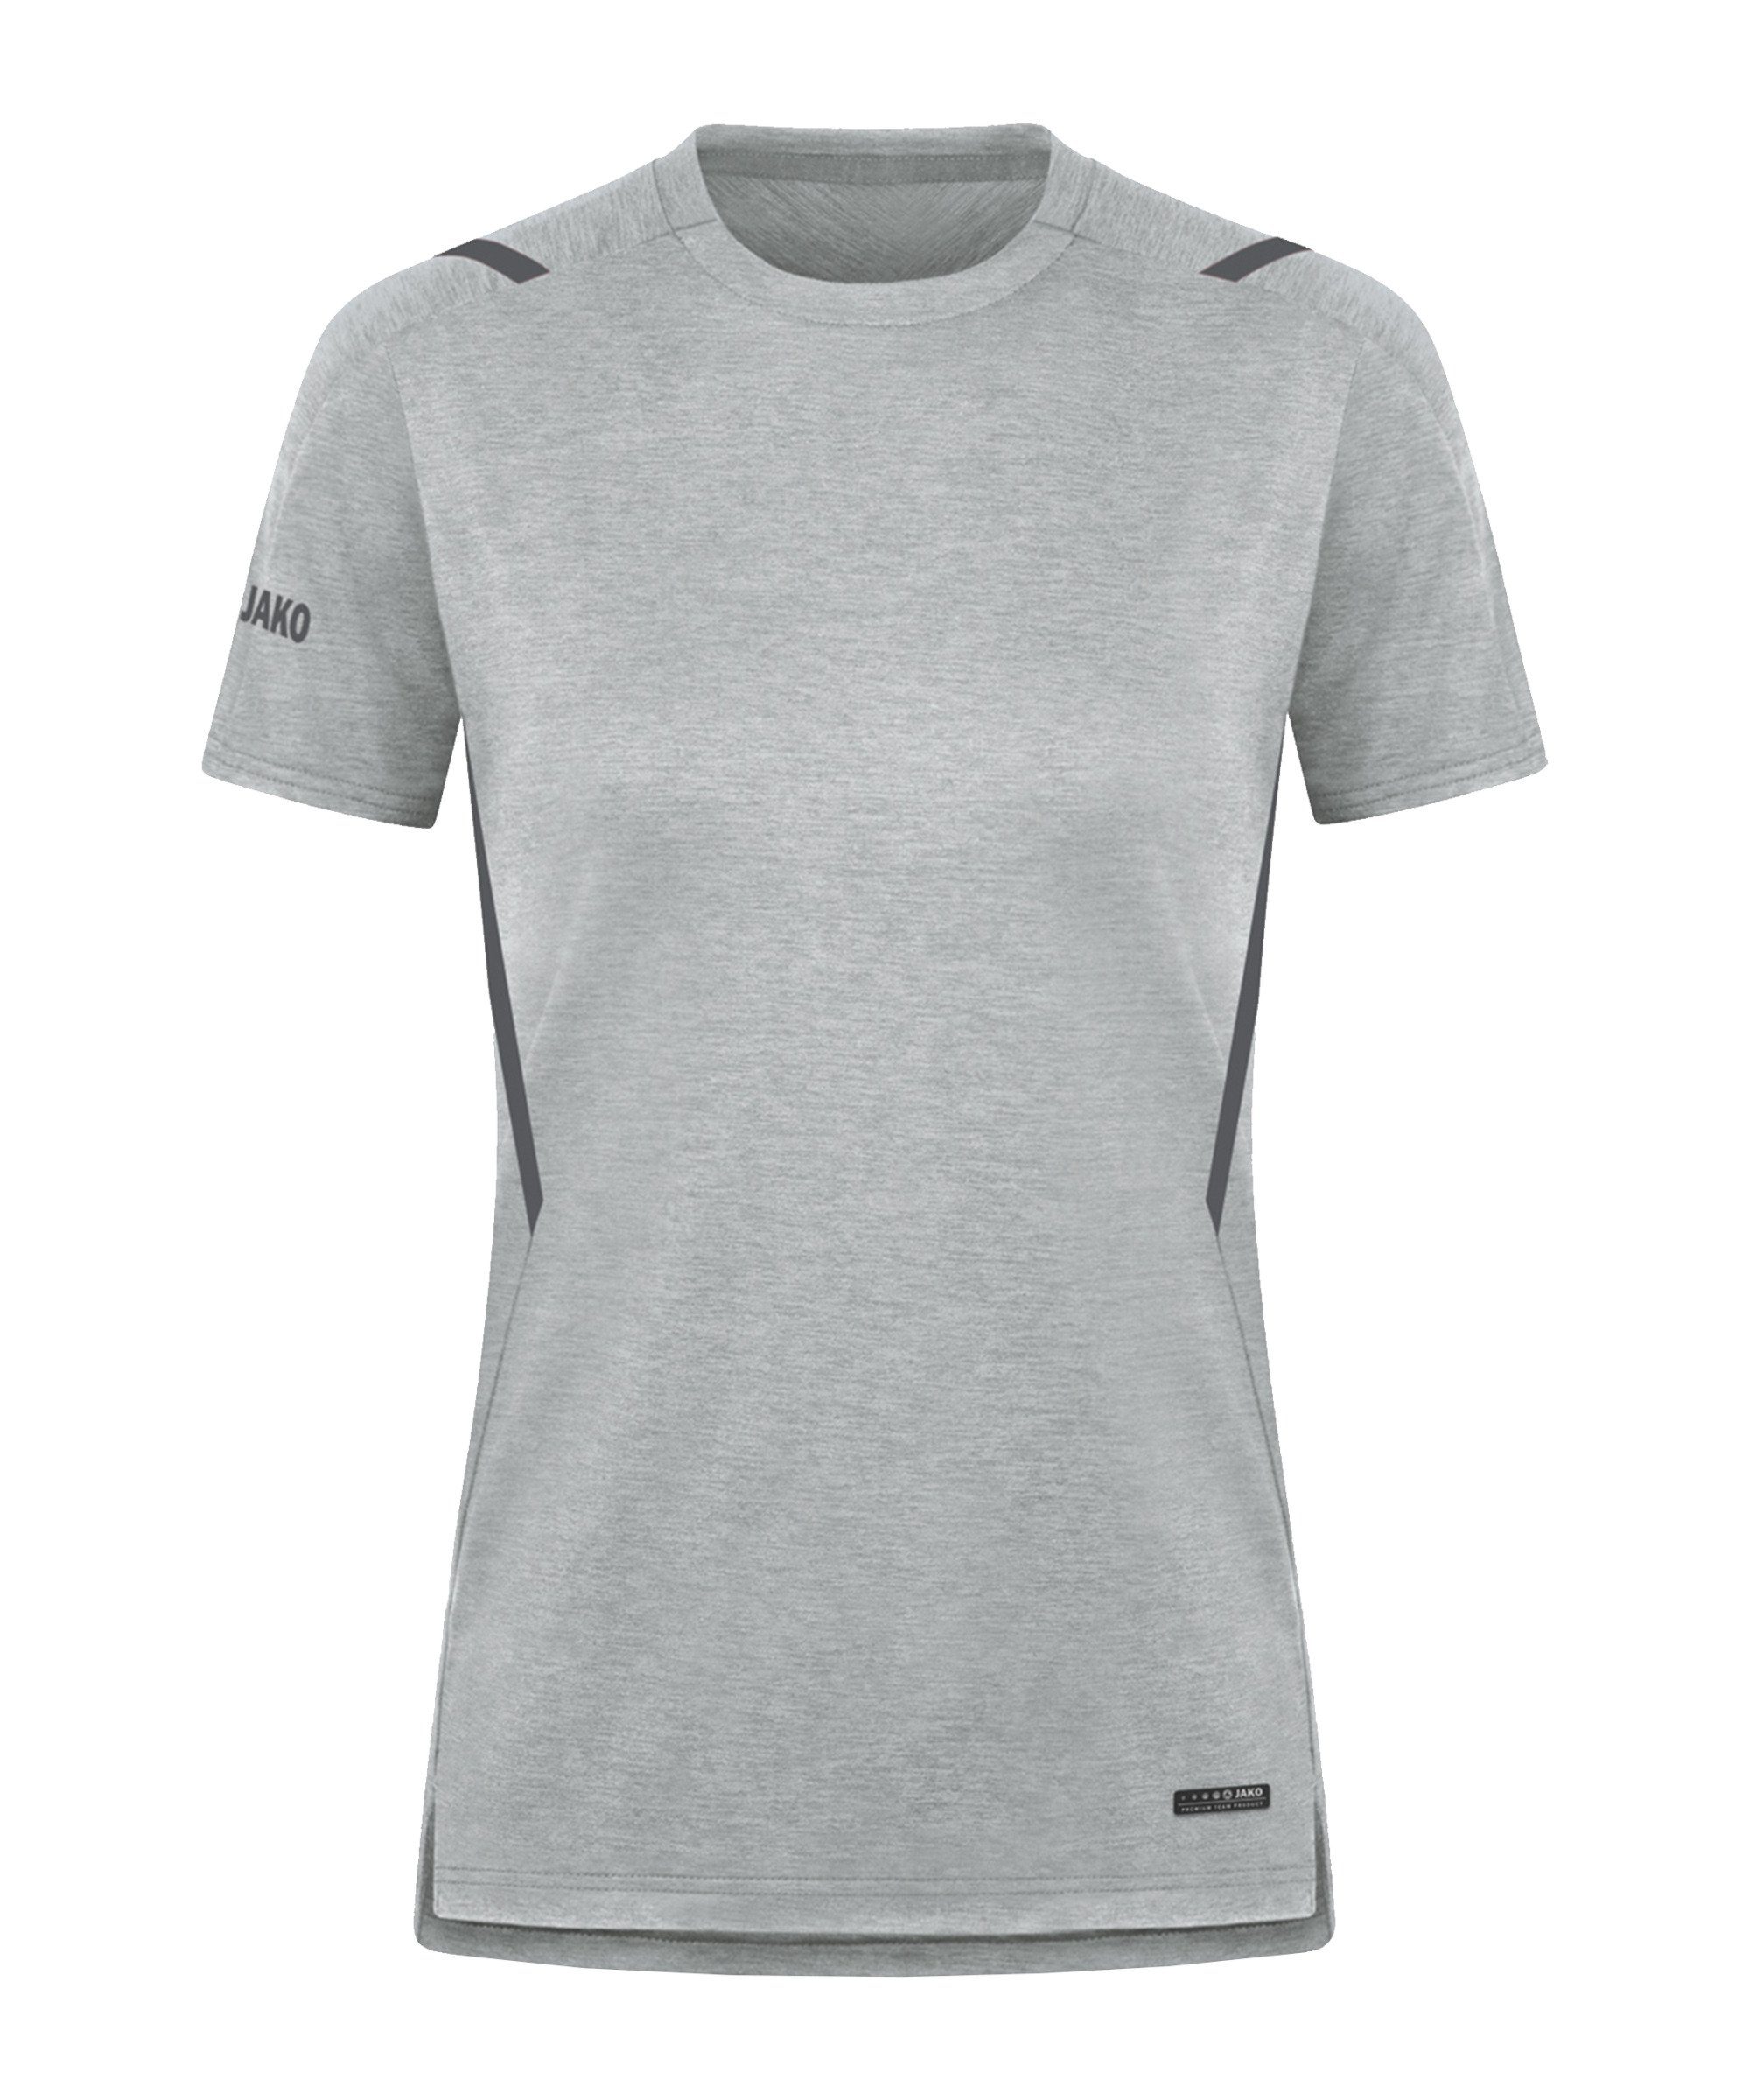 Jako Challenge T-Shirt graugrau Damen Freizeit default T-Shirt